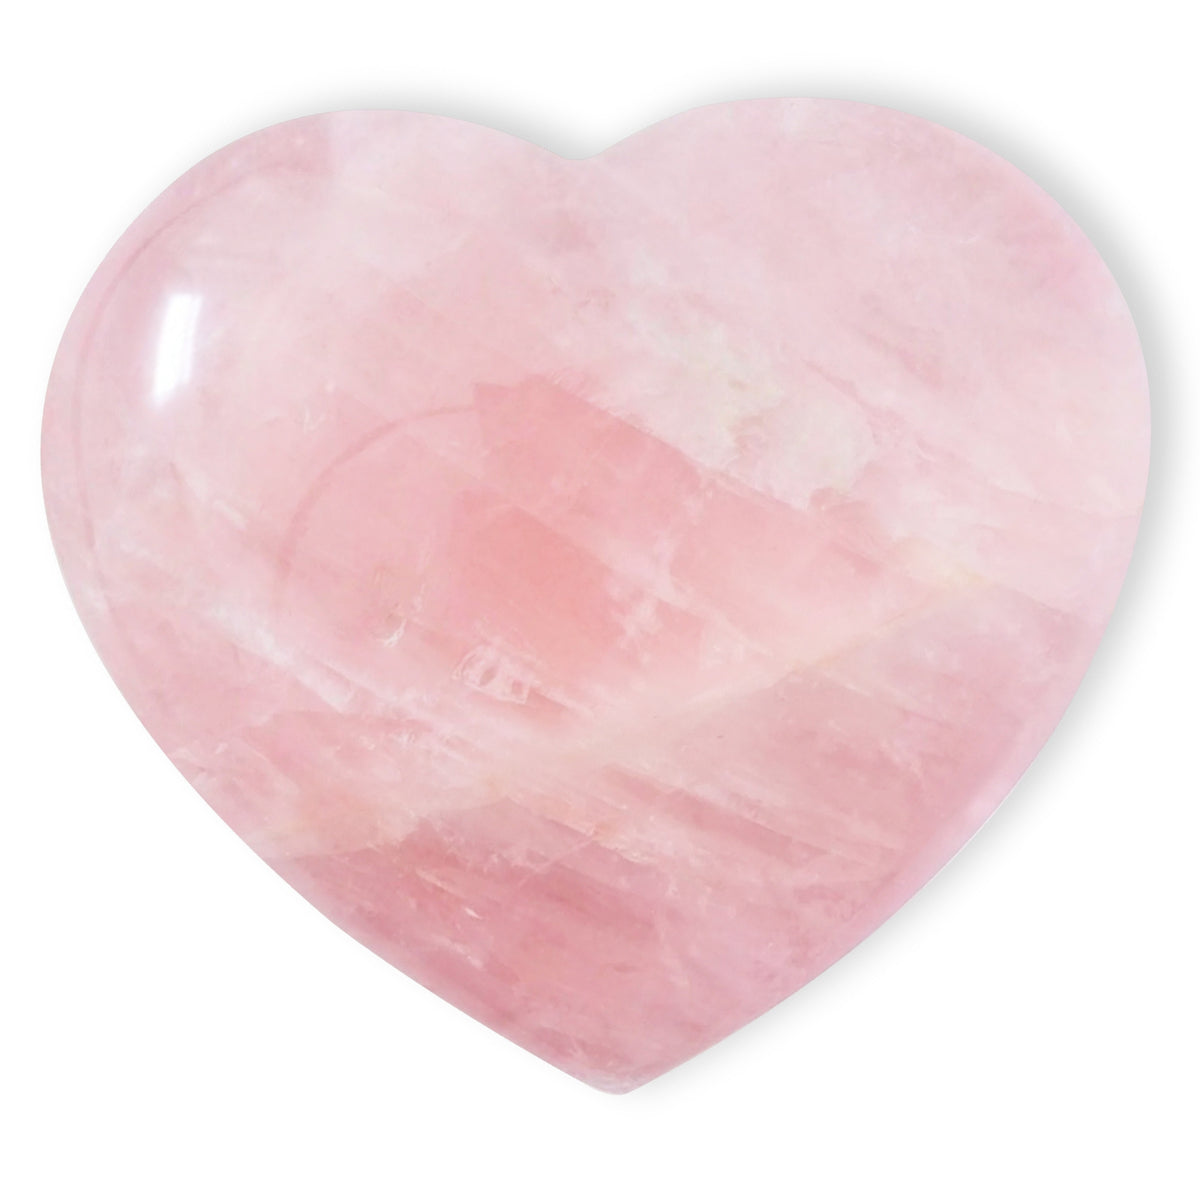 Natural Rose Quartz Heart Shaped Crystal Stone Original Certified